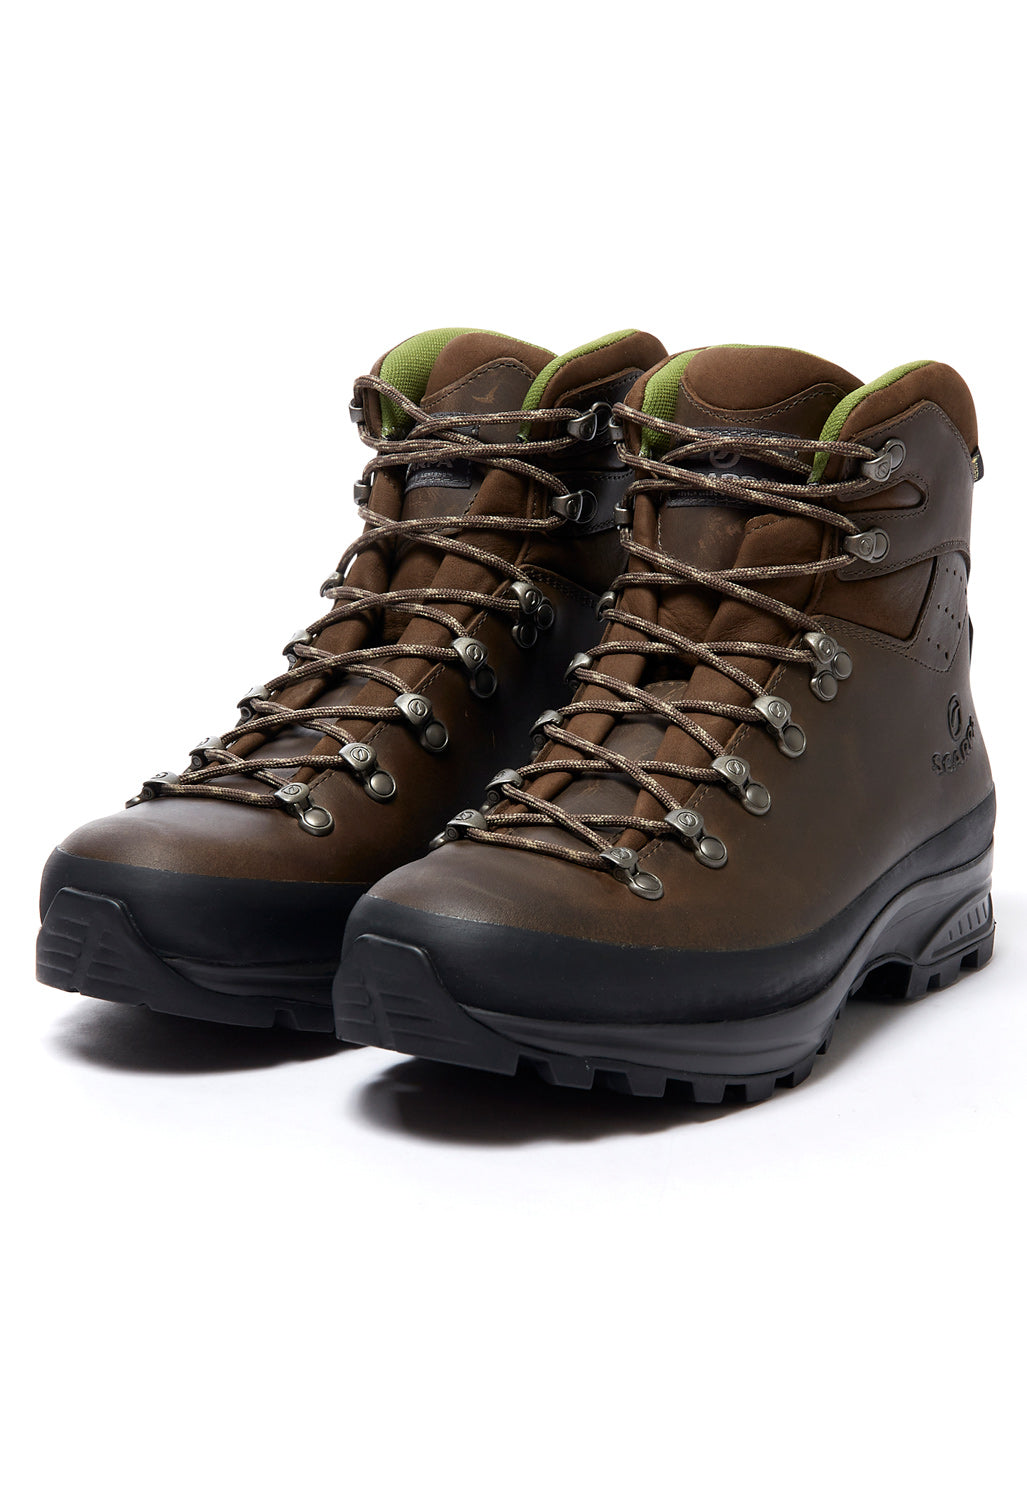 Scarpa Trek LV GORE-TEX Men's Boots - Brown